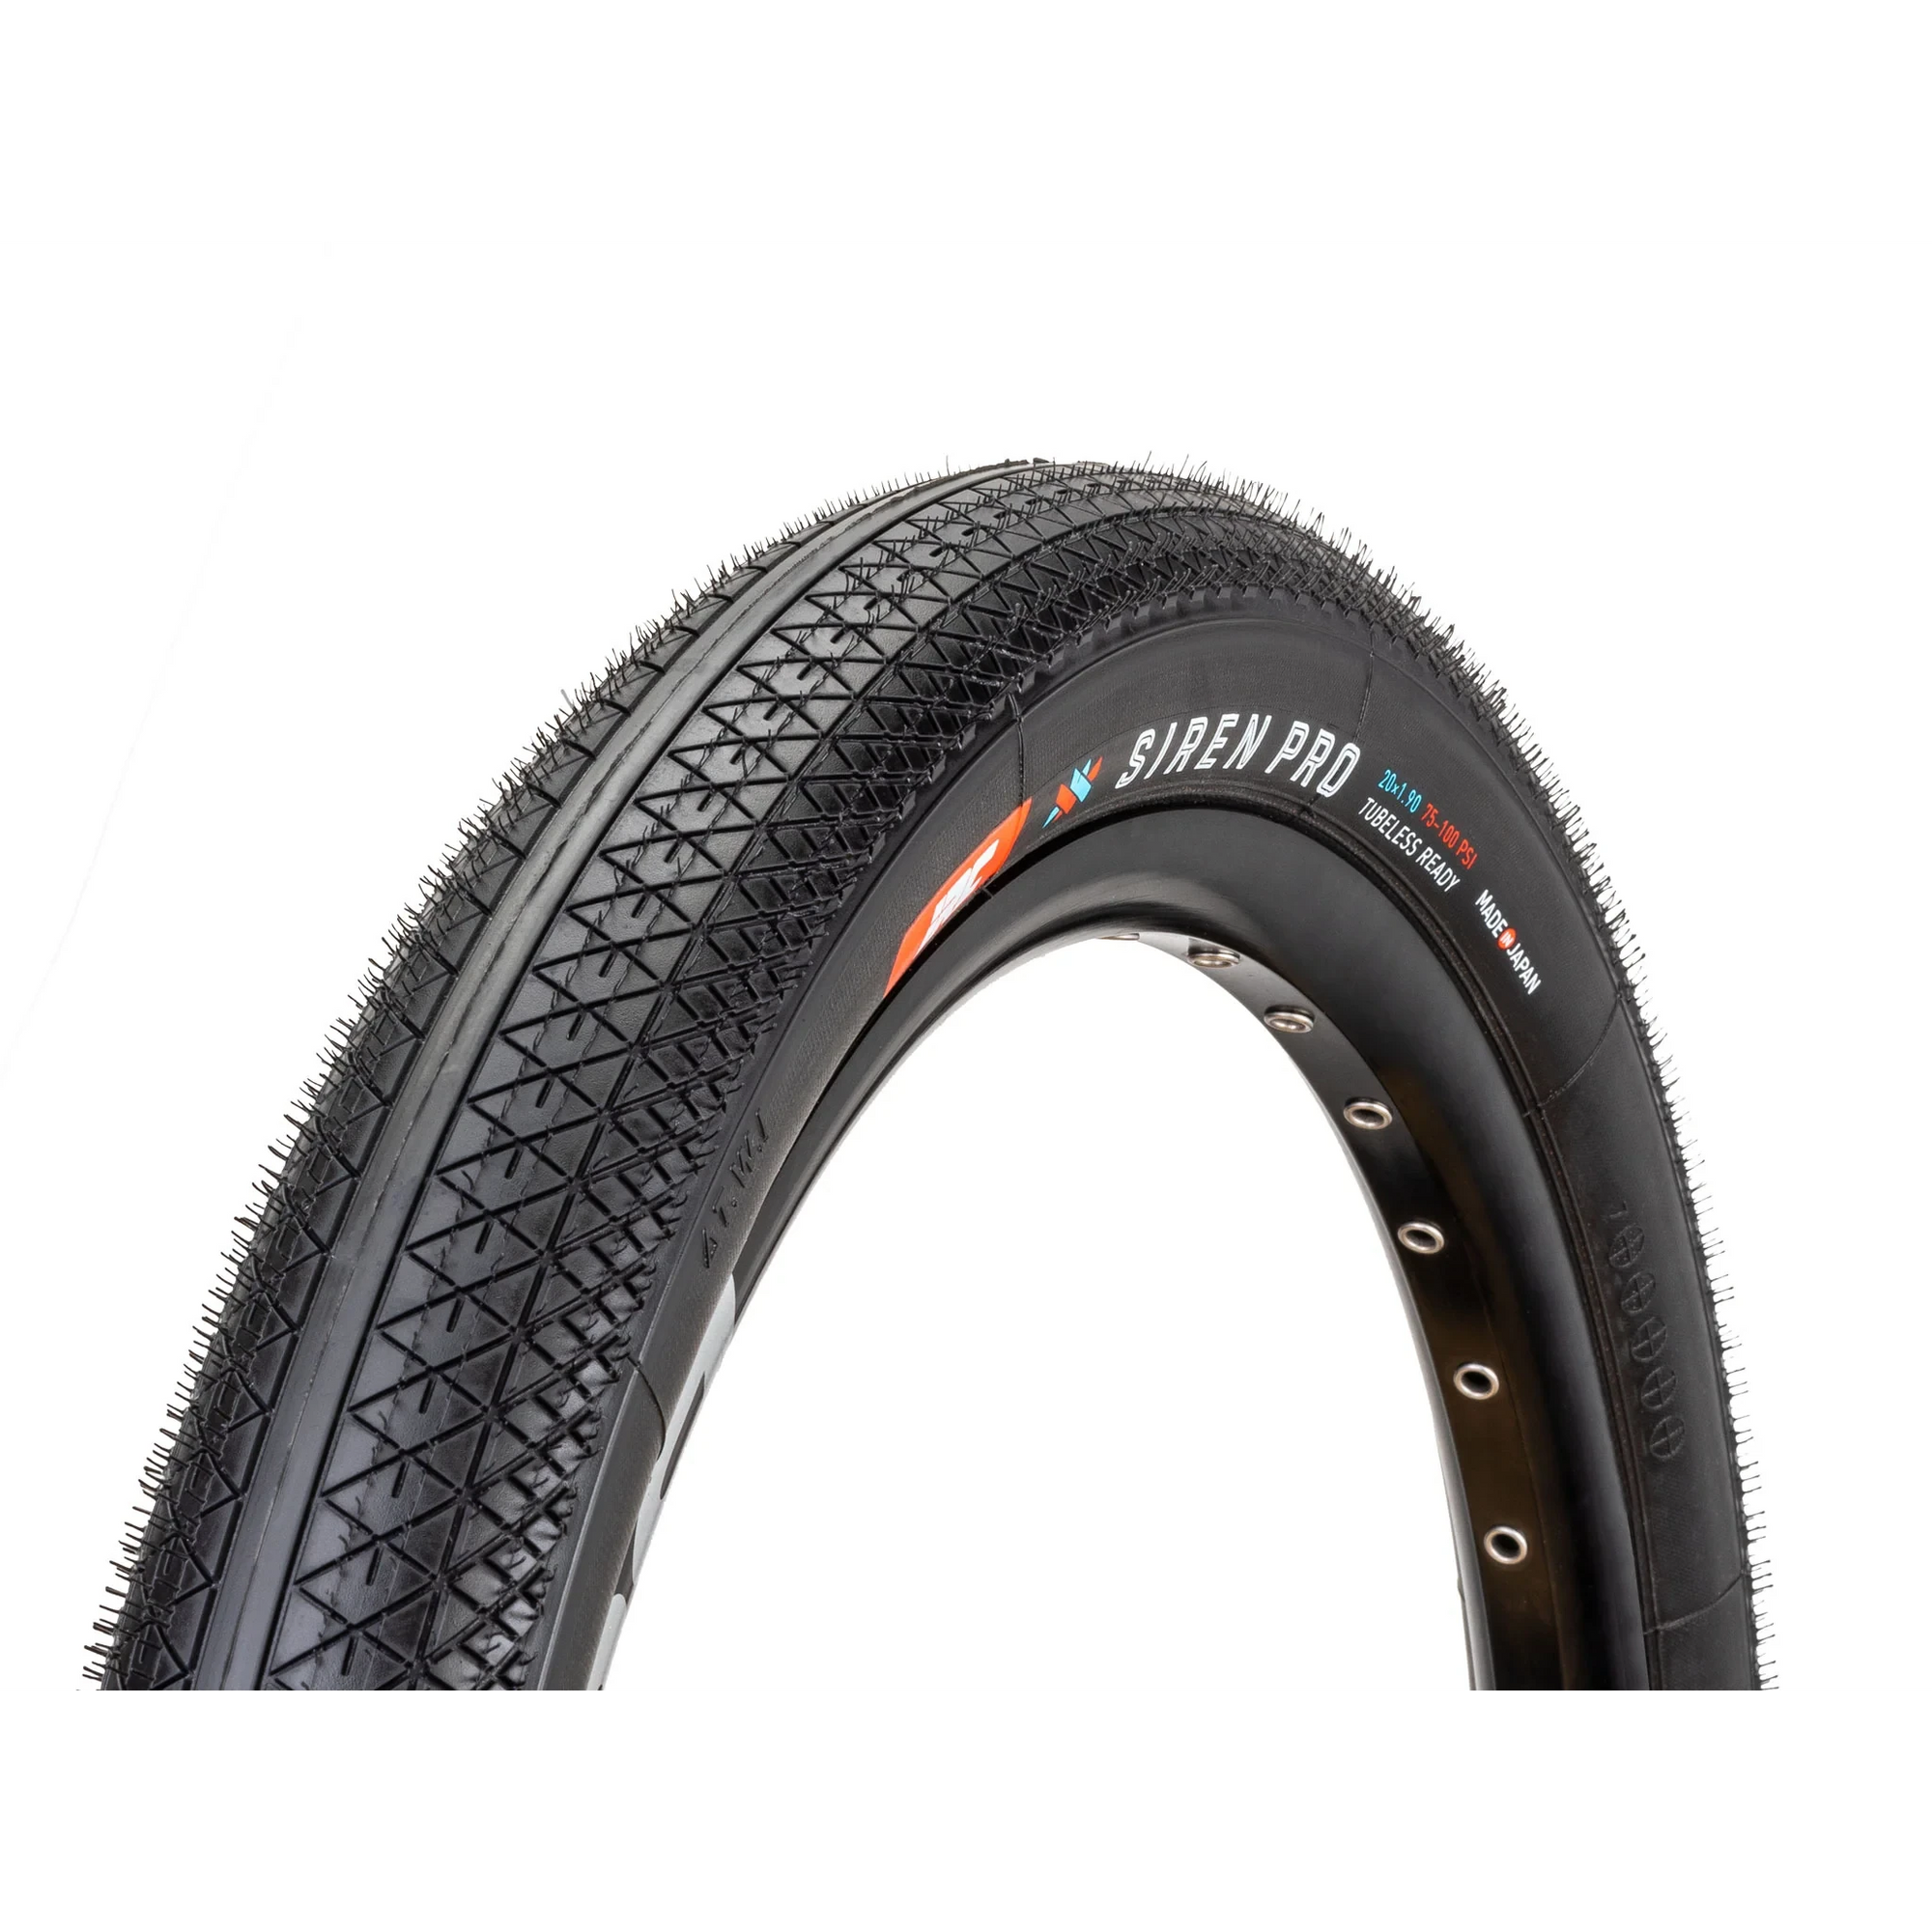 20x1.75 IRC Siren Pro Tubeless Ready BMX Race Tire - 100psi - Black